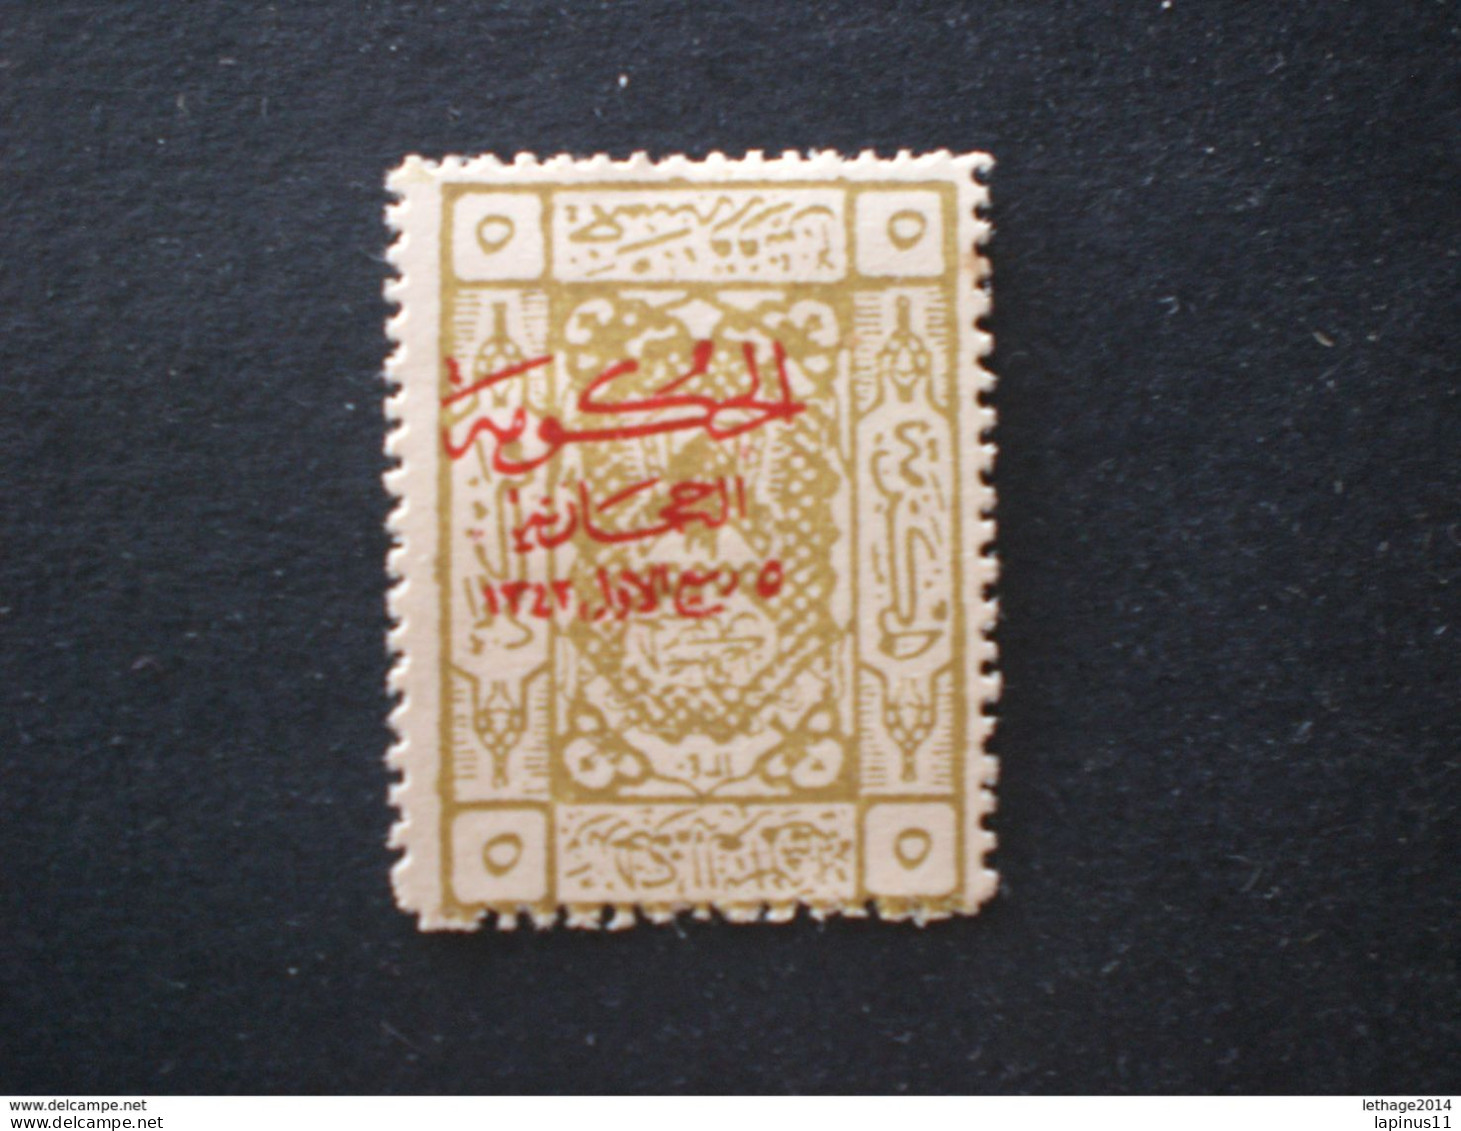 Arabie Saoudite المملكة العربية السعودية SAUDI ARABIA HEJAZ 1925 HORIZONTAL OVERPRINT INVERTED RED MH - Arabia Saudita